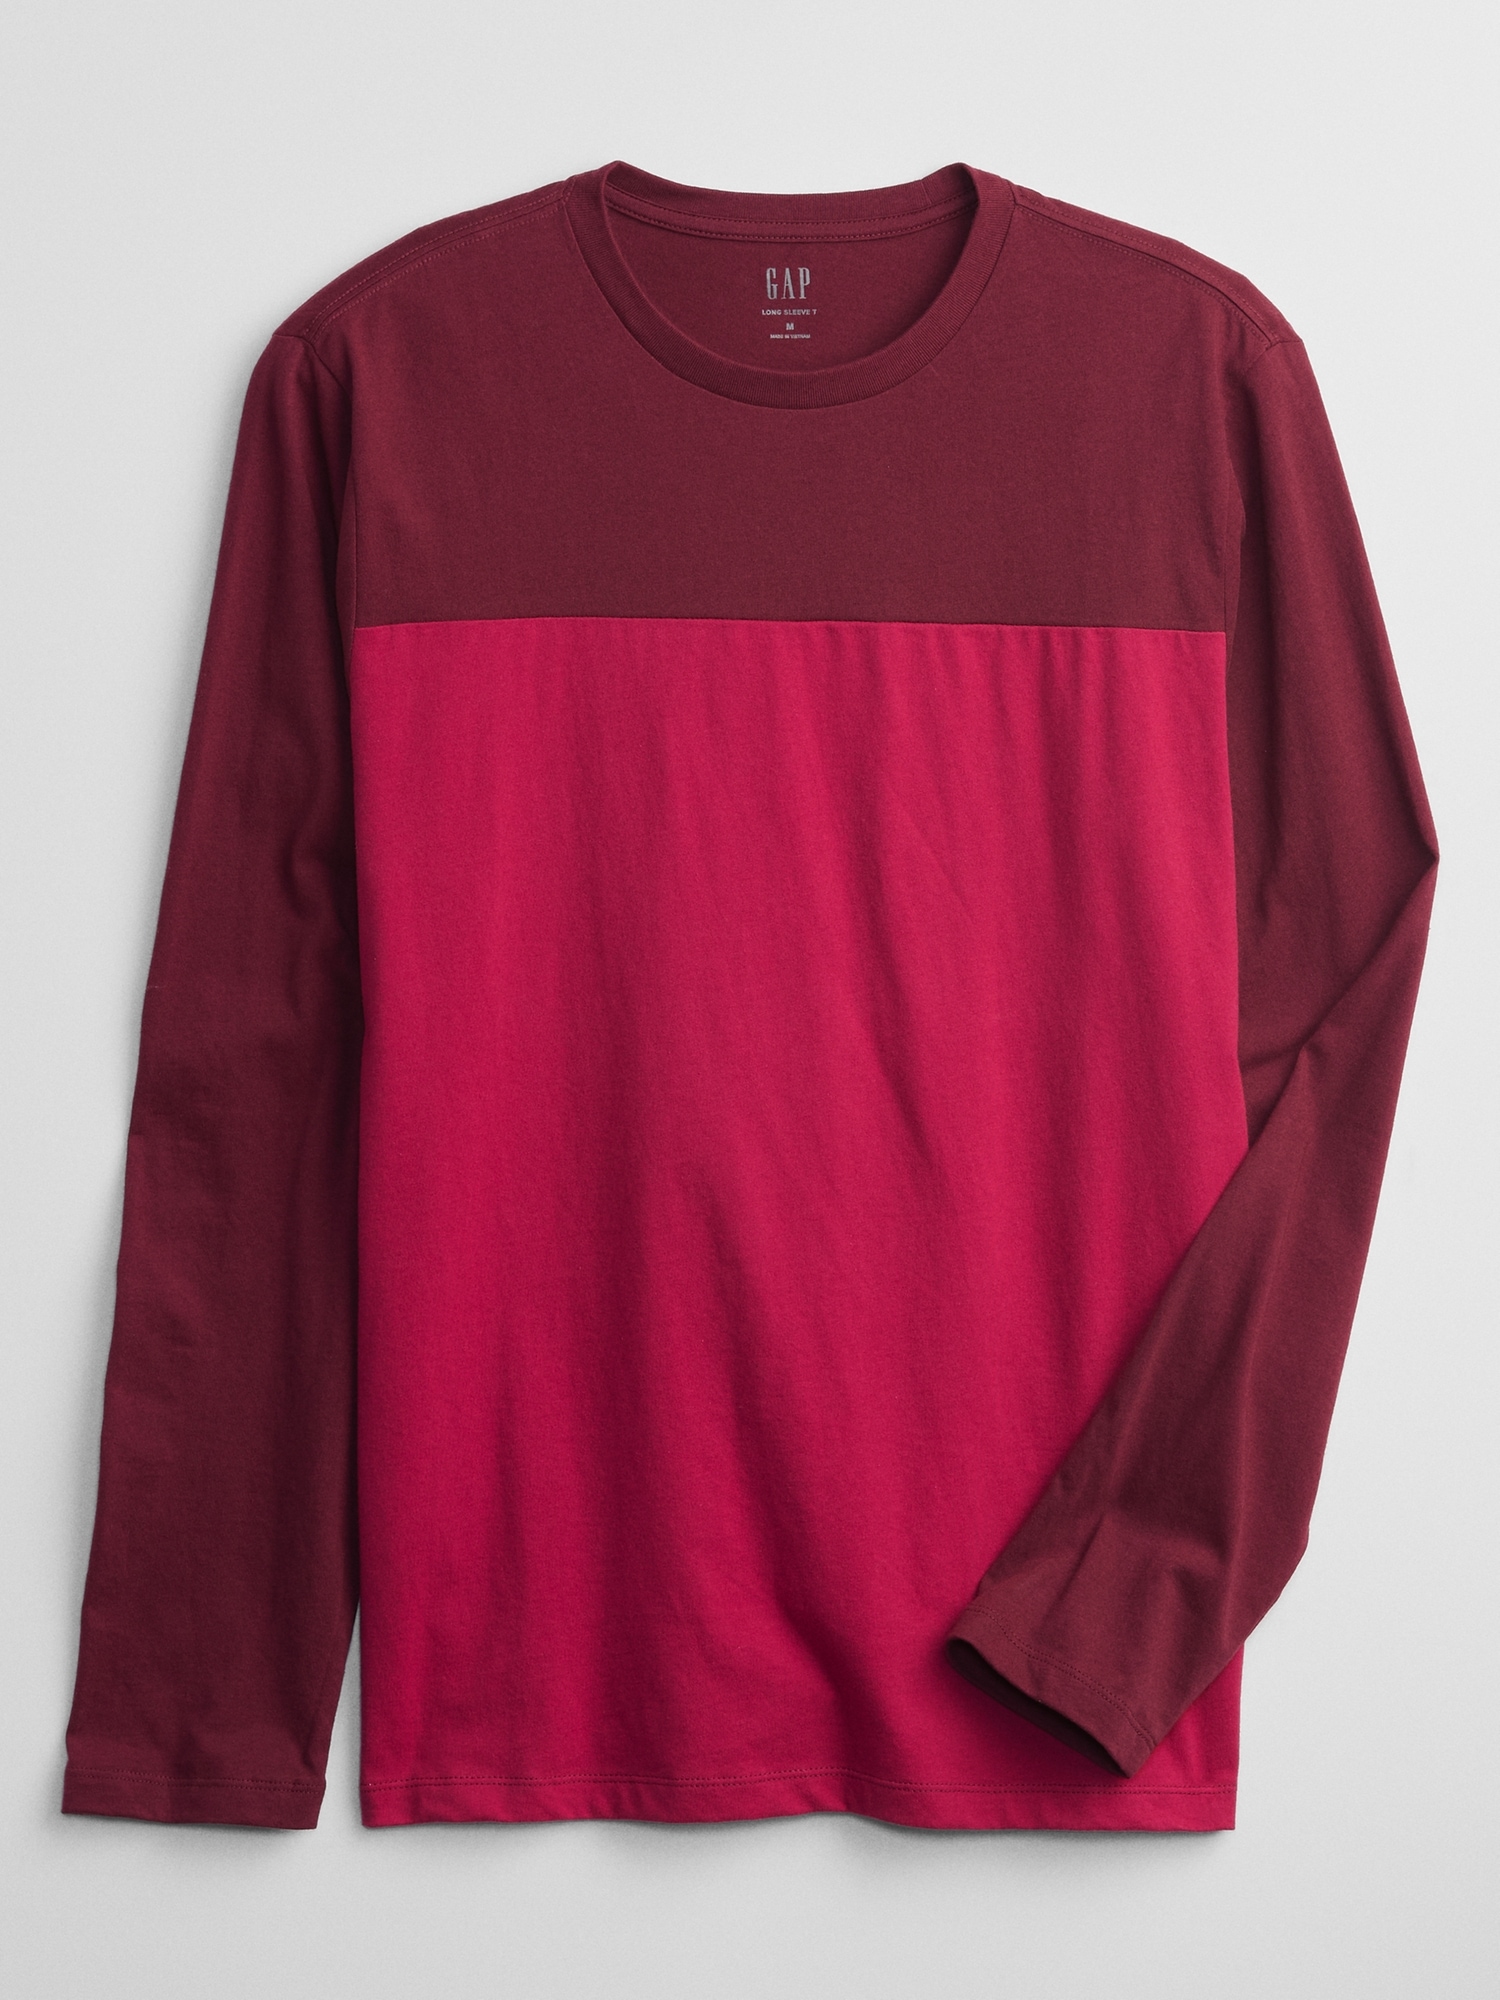 Everyday Colorblock T-Shirt | Gap Factory